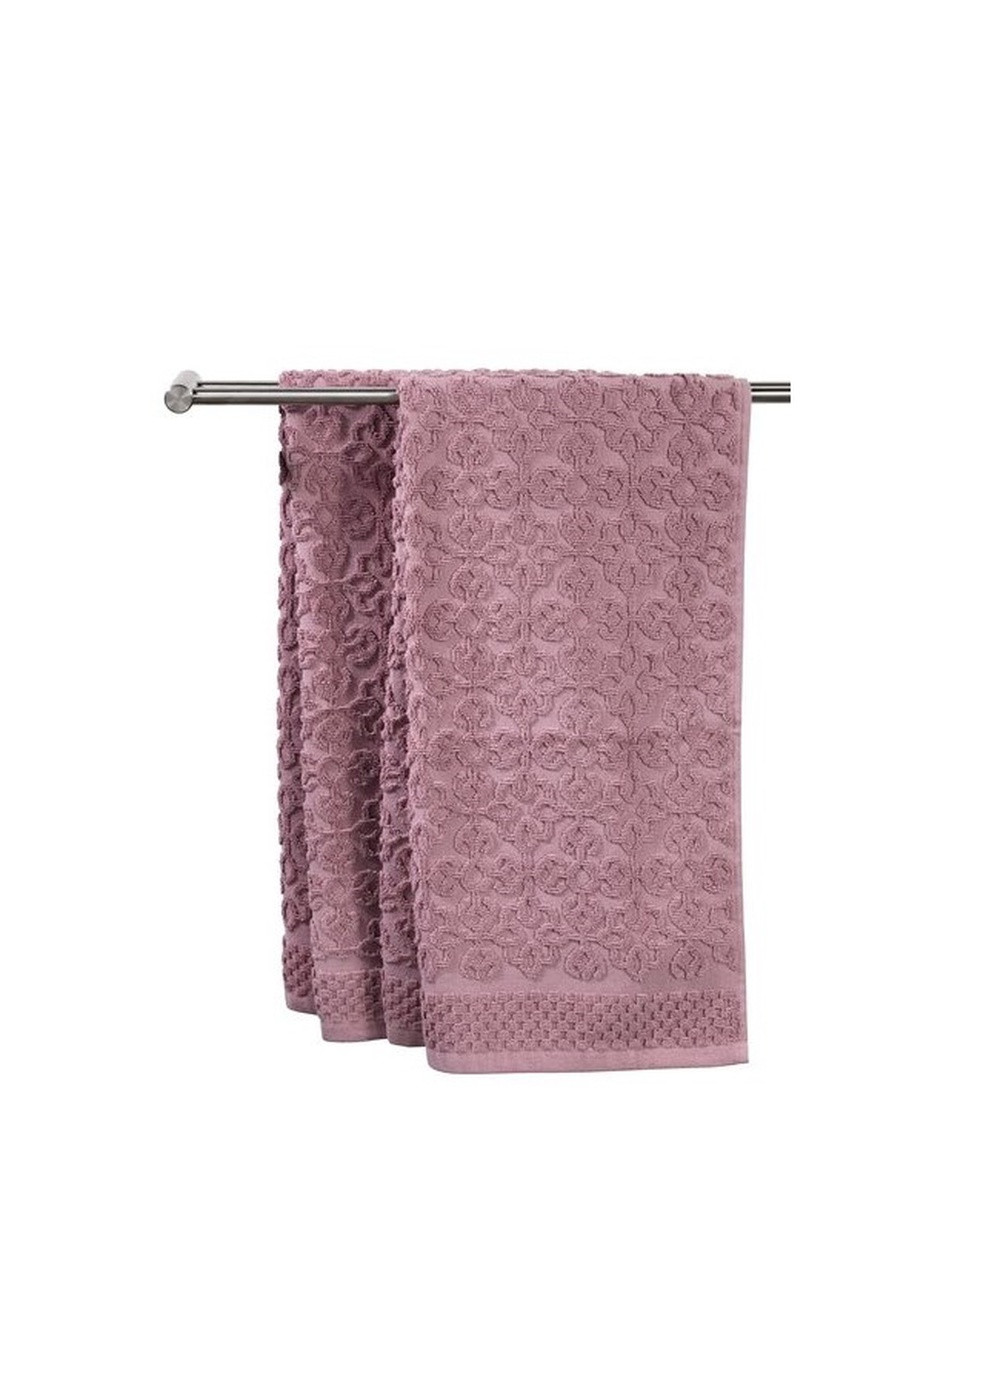 No Brand полотенце хлопок 50x100см розовый розовый производство - Китай